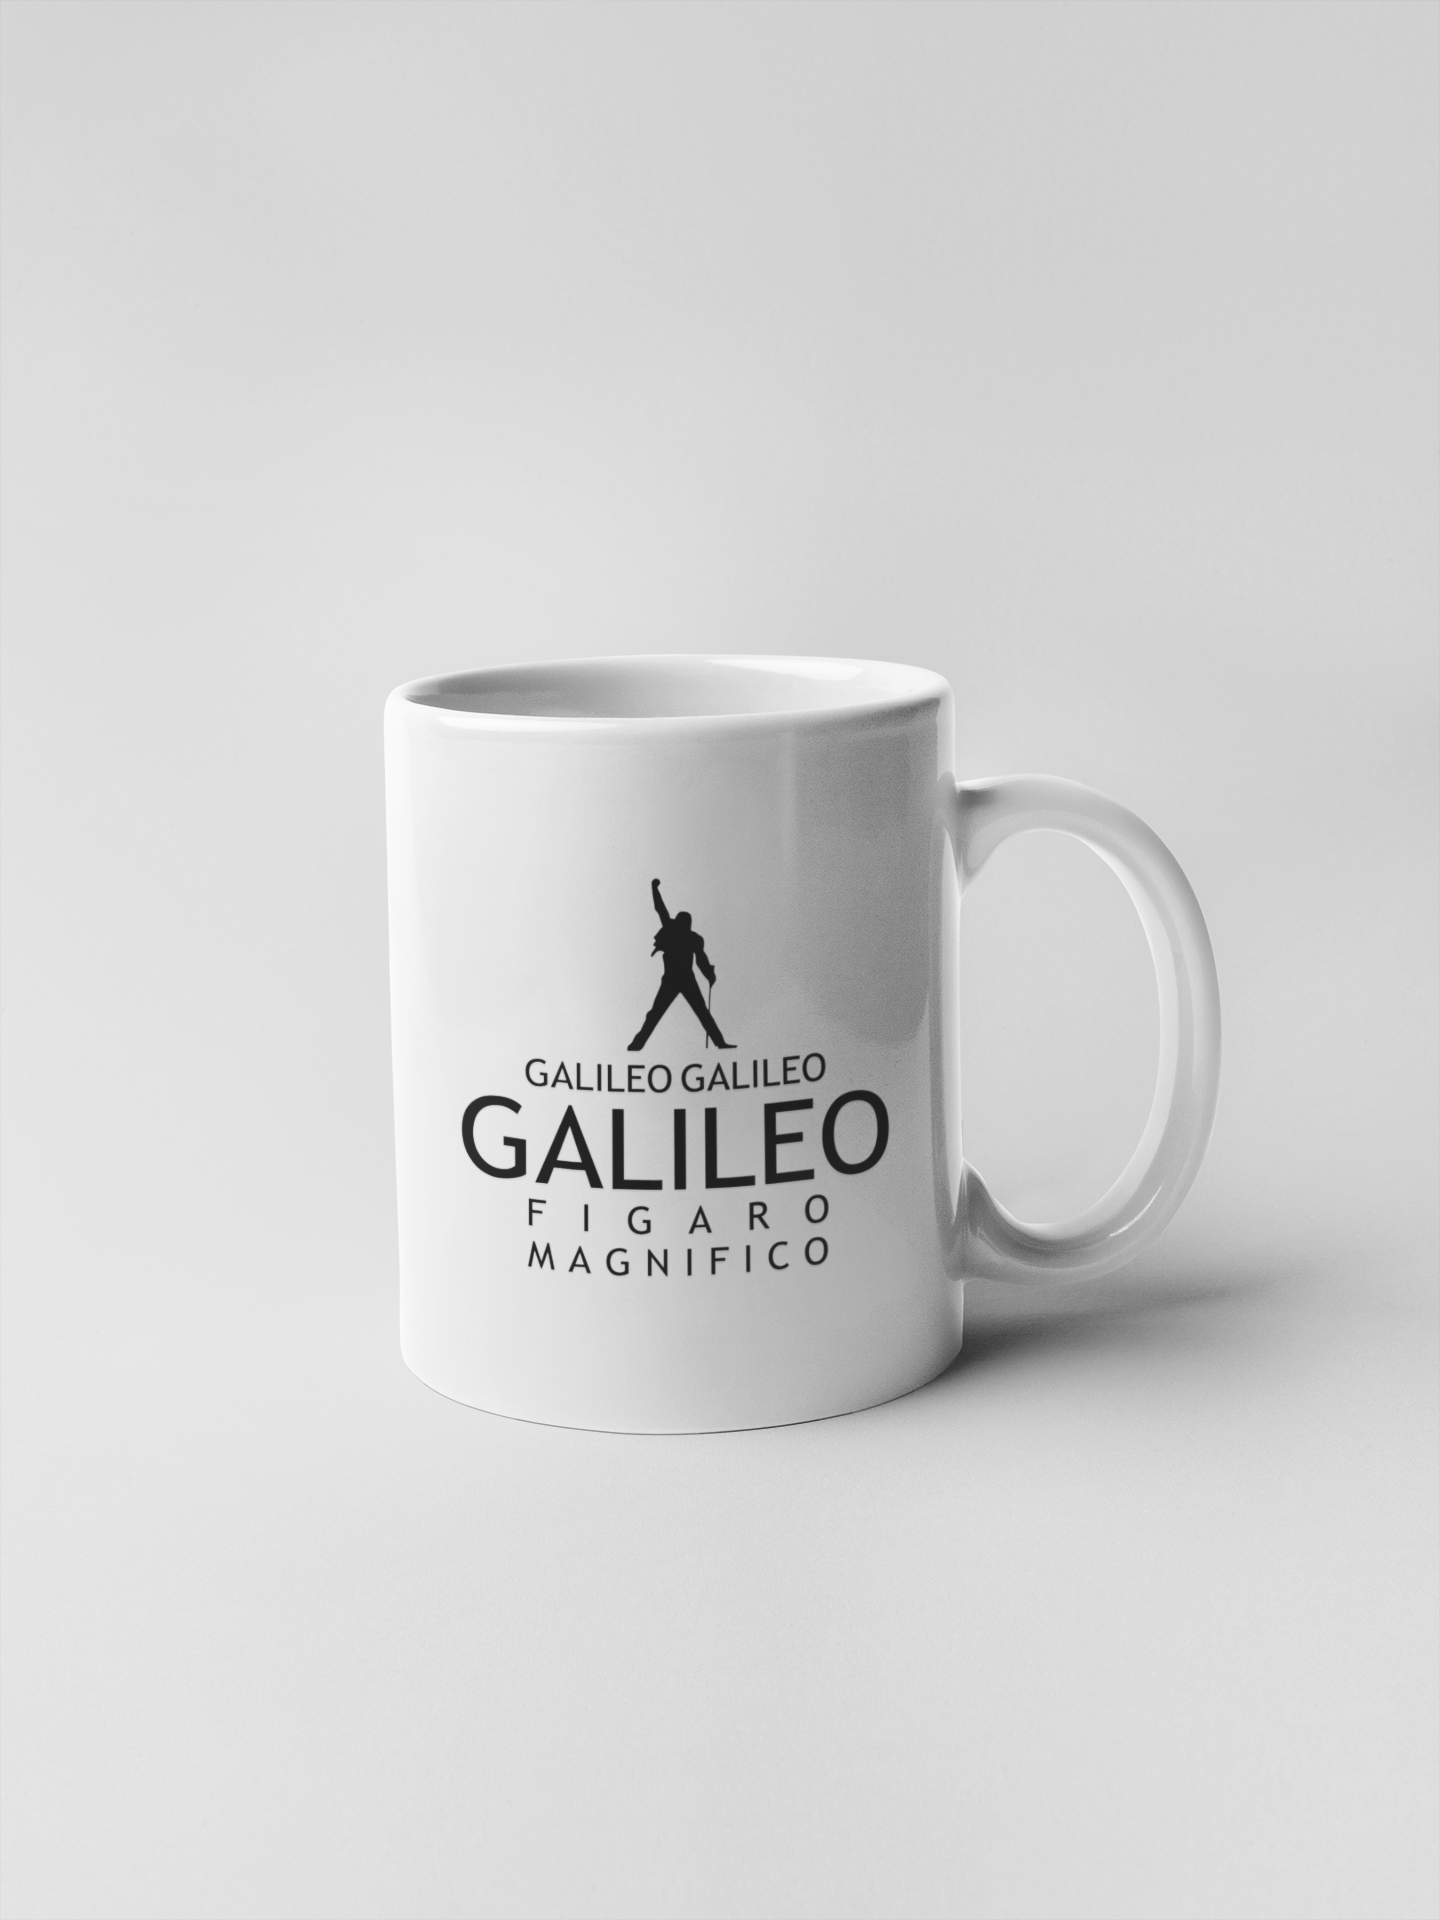 Galileo Figaro Magnifico Ceramic Coffee Mugs